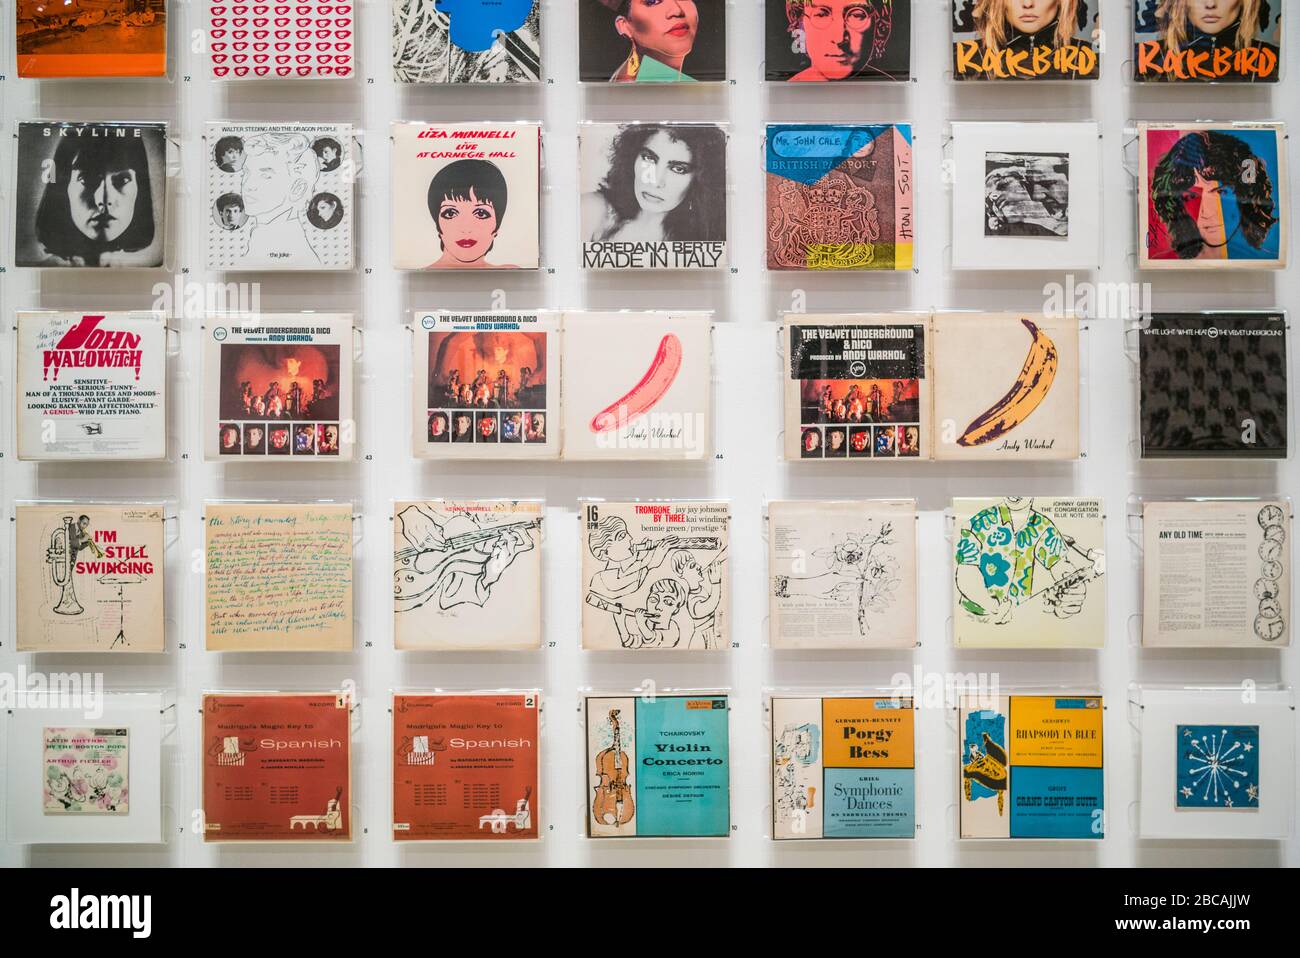 SUECIA, Scania, Malmo, moderna Museet Malmo Museo de Arte moderno,  exposición de portadas de discos diseñados por el artista Andy Warhol  Fotografía de stock - Alamy